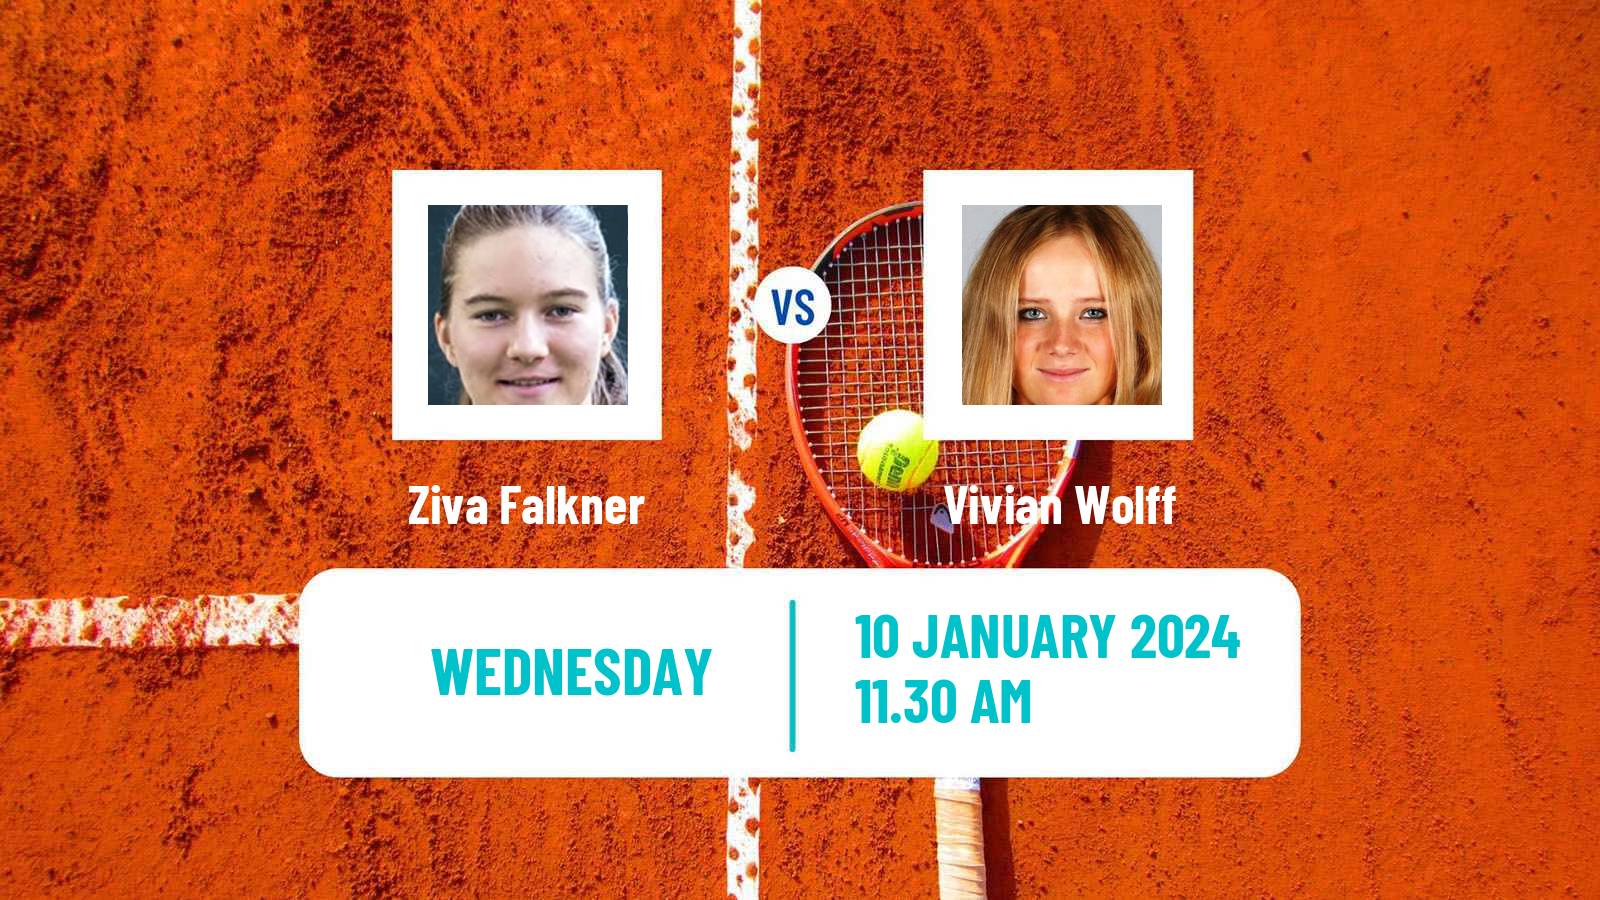 Tennis ITF W35 Naples Fl Women Ziva Falkner - Vivian Wolff